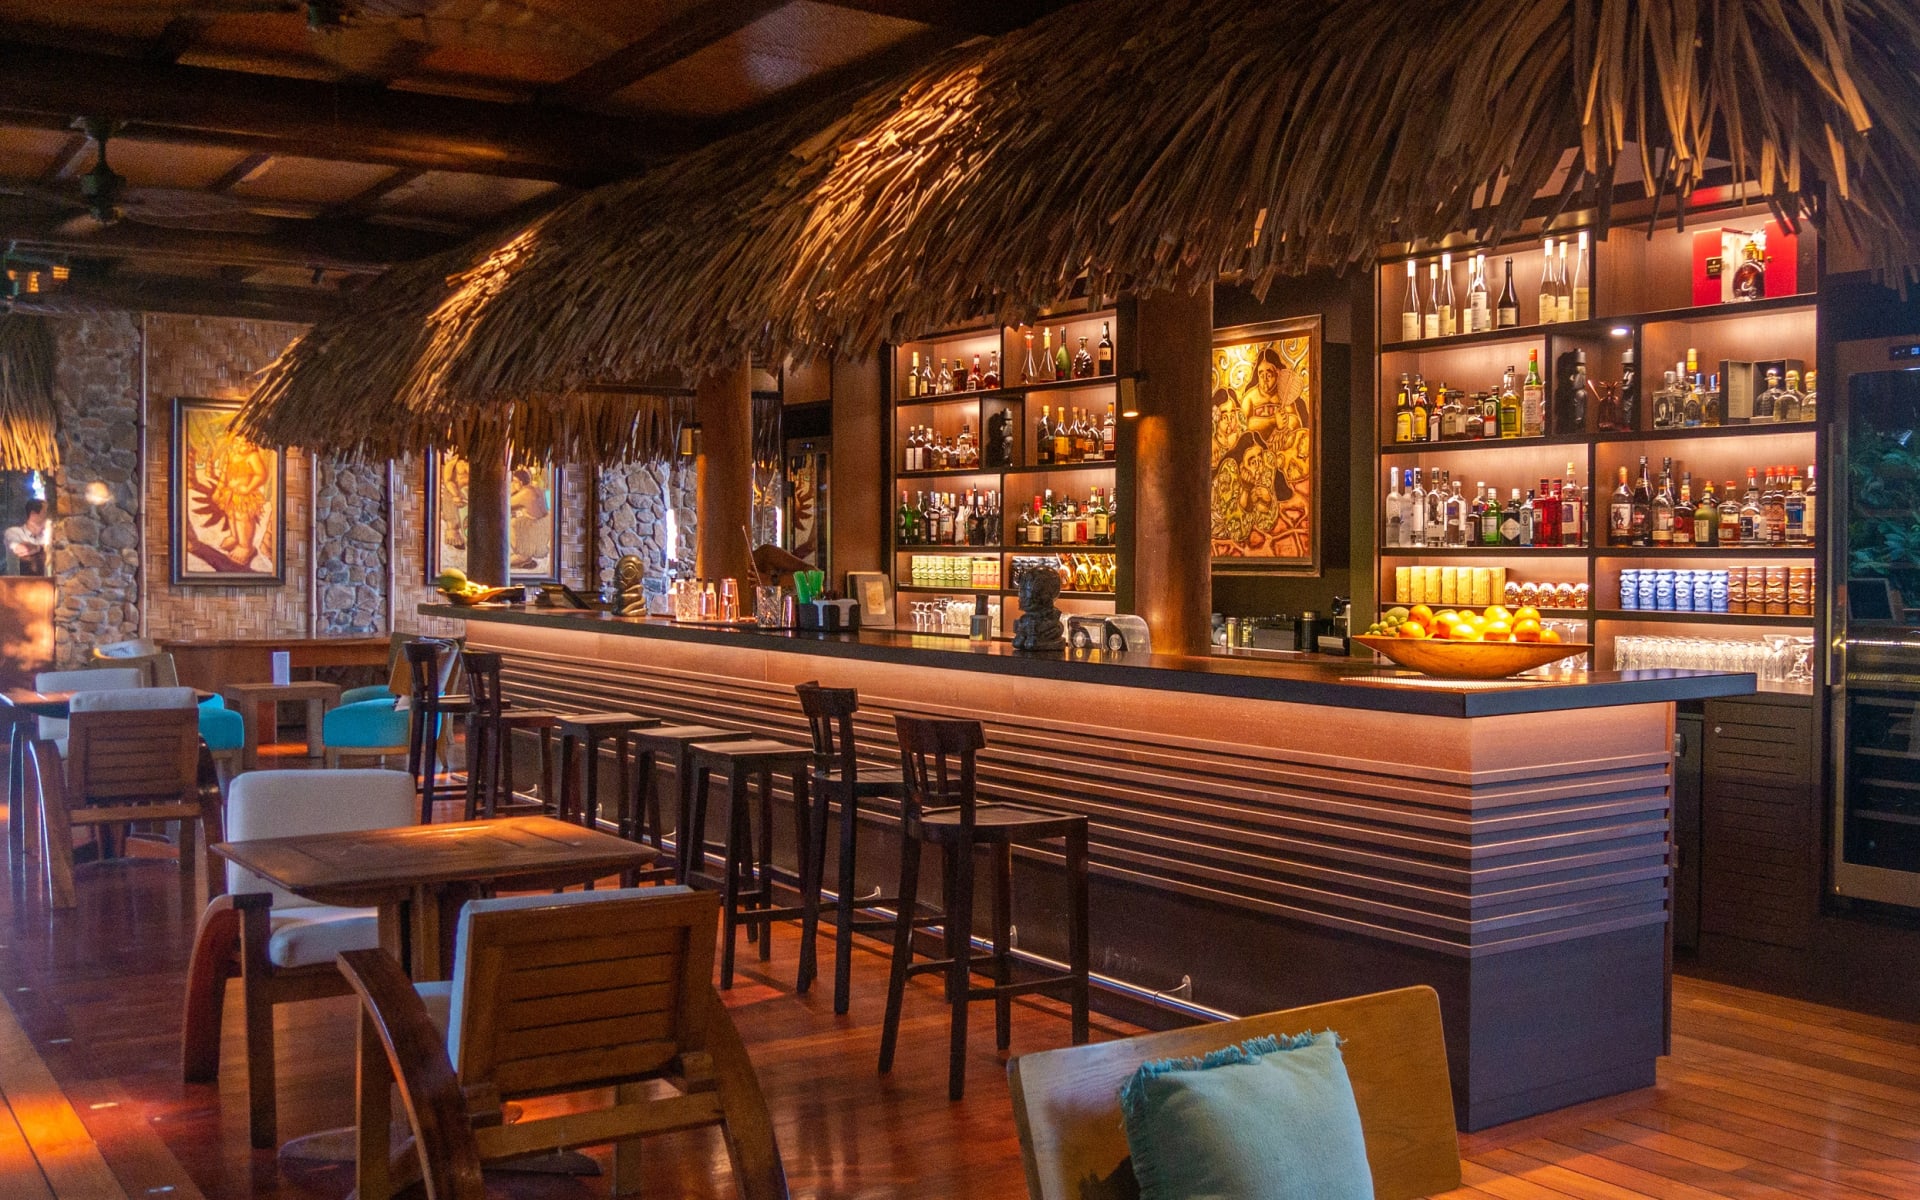 Gorgeous tiki bar with palm leaf canopy over bar area 